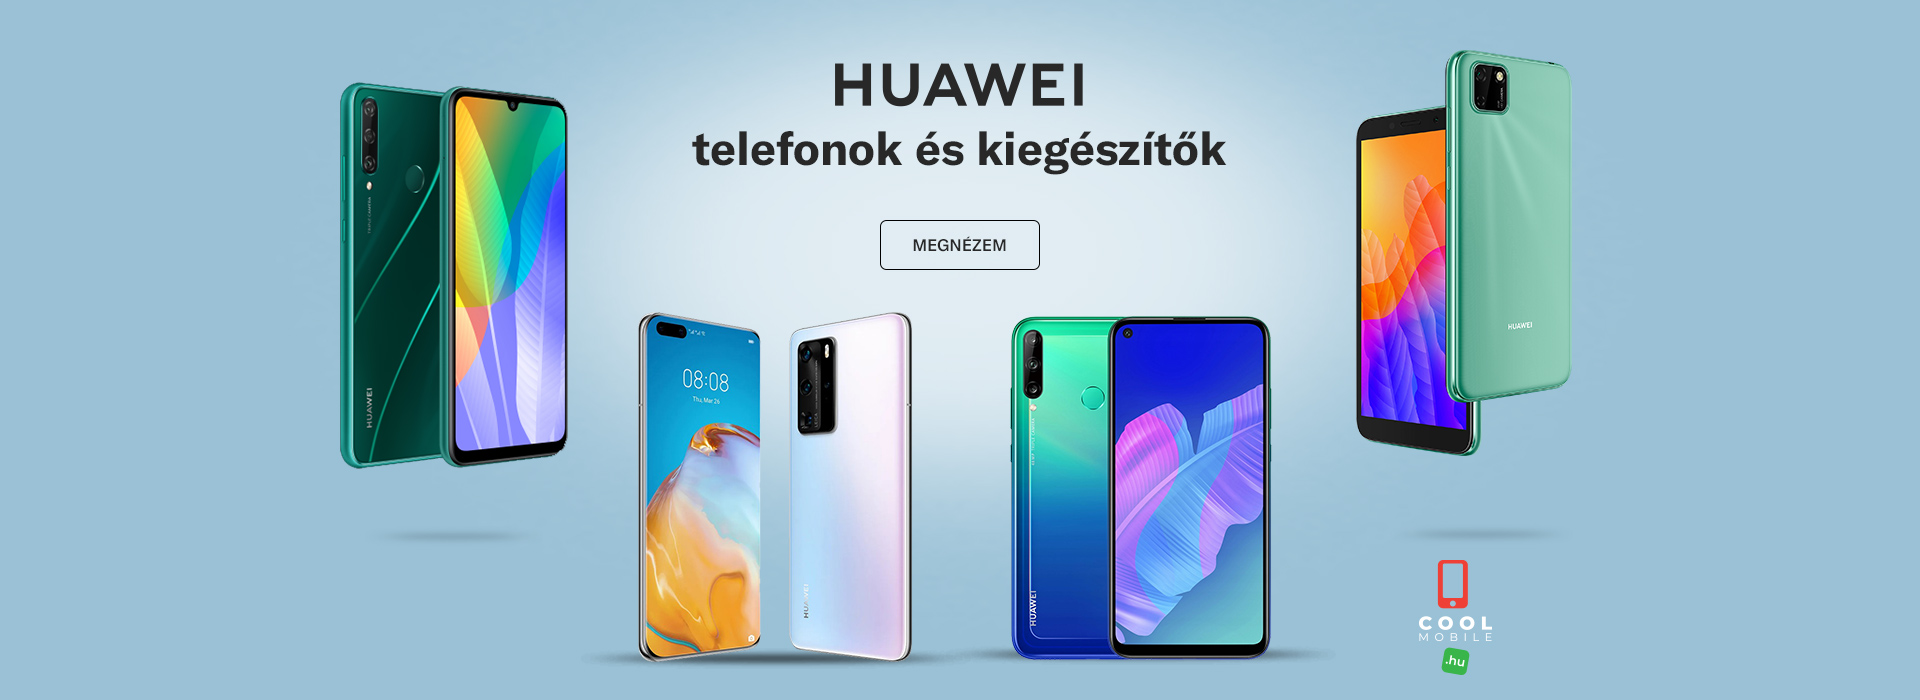 Huawei Okostelefonok